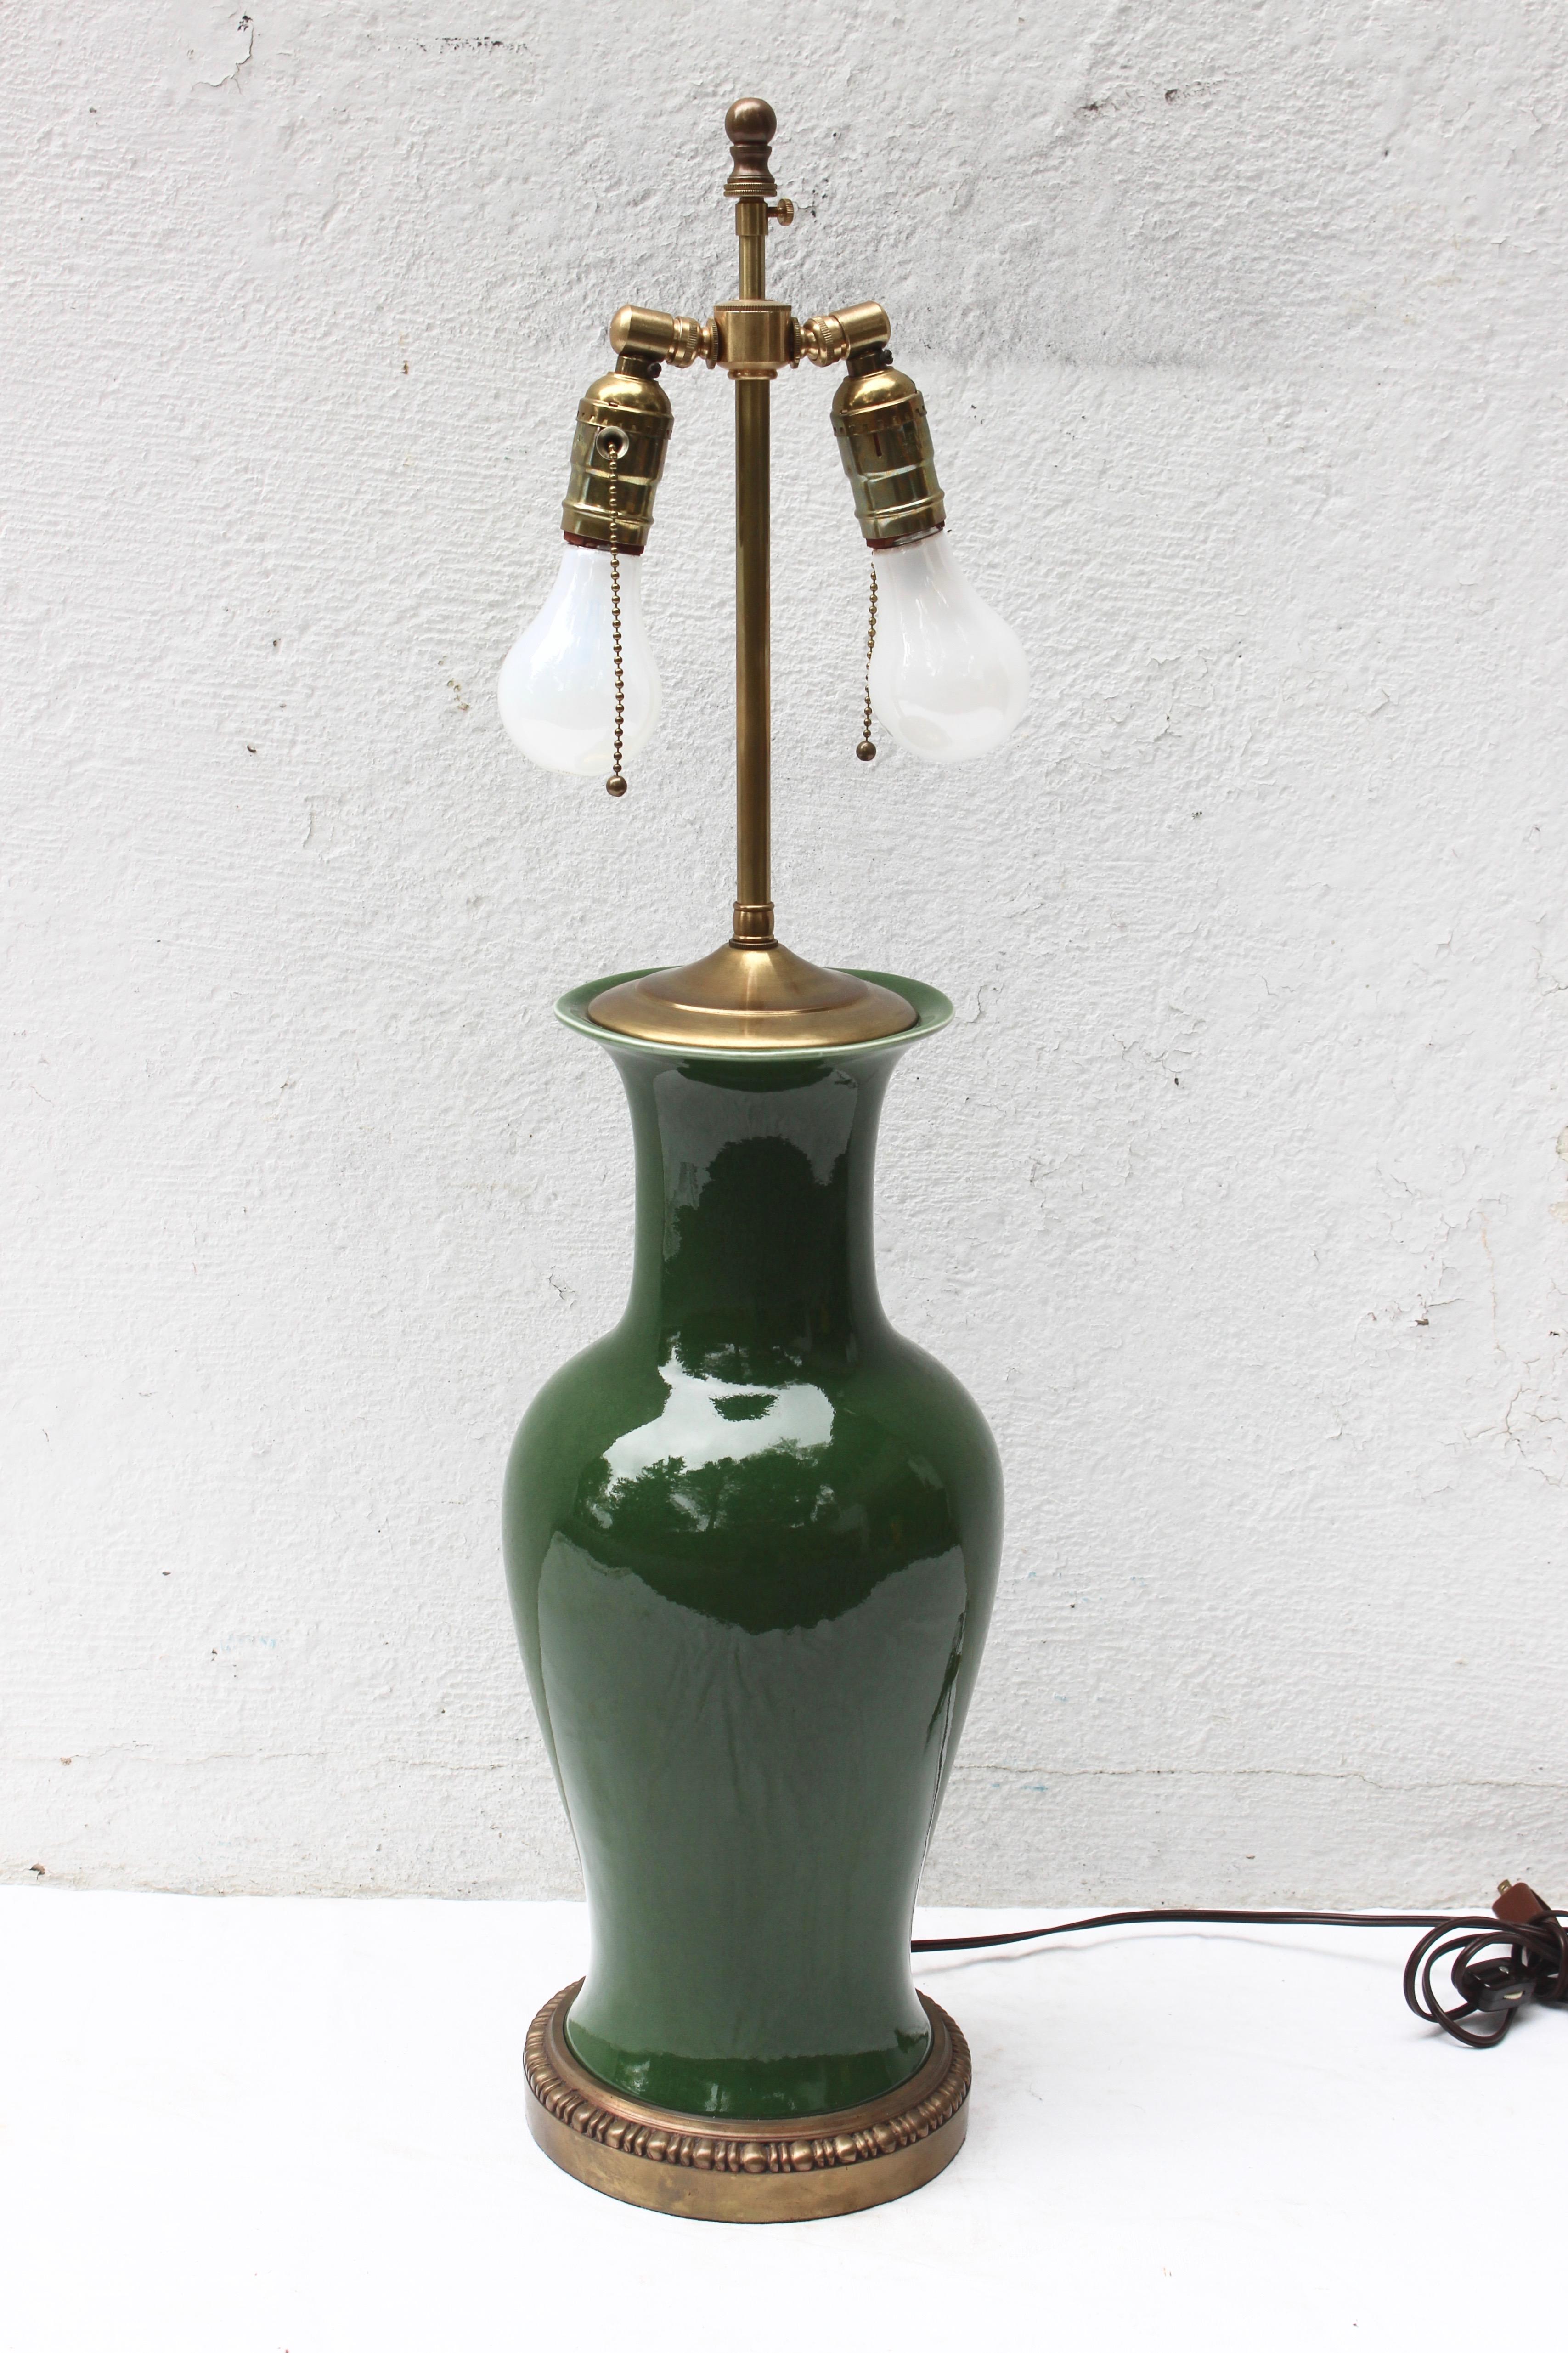 Große grüne Keramik-Tischlampe mit Messingfuß

Lampenfuß: 29,5 